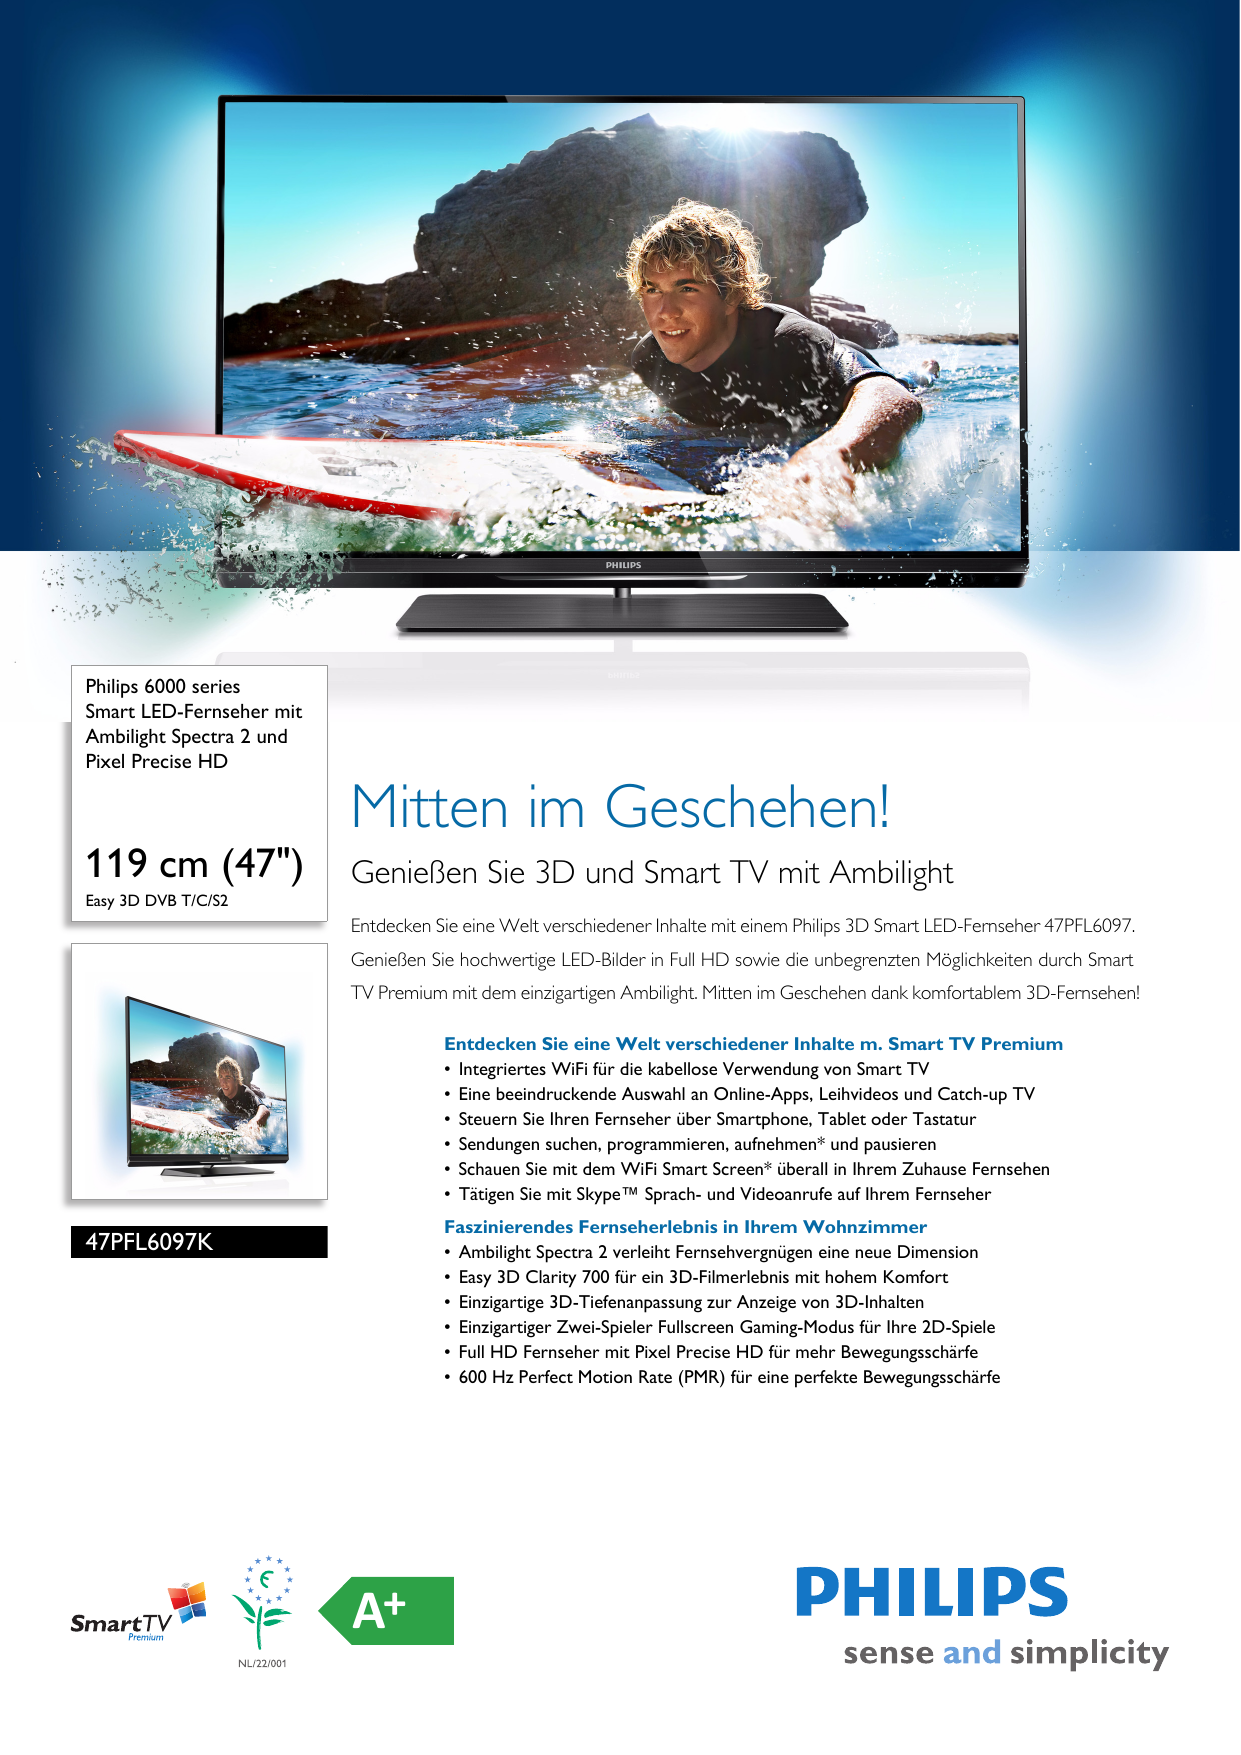 Page 1 of 3 - Philips 47PFL6097K/12 Leaflet 47PFL6097K_12 Released Germany (German)  User Manual Datenblatt 47pfl6097k 12 Pss Deuat